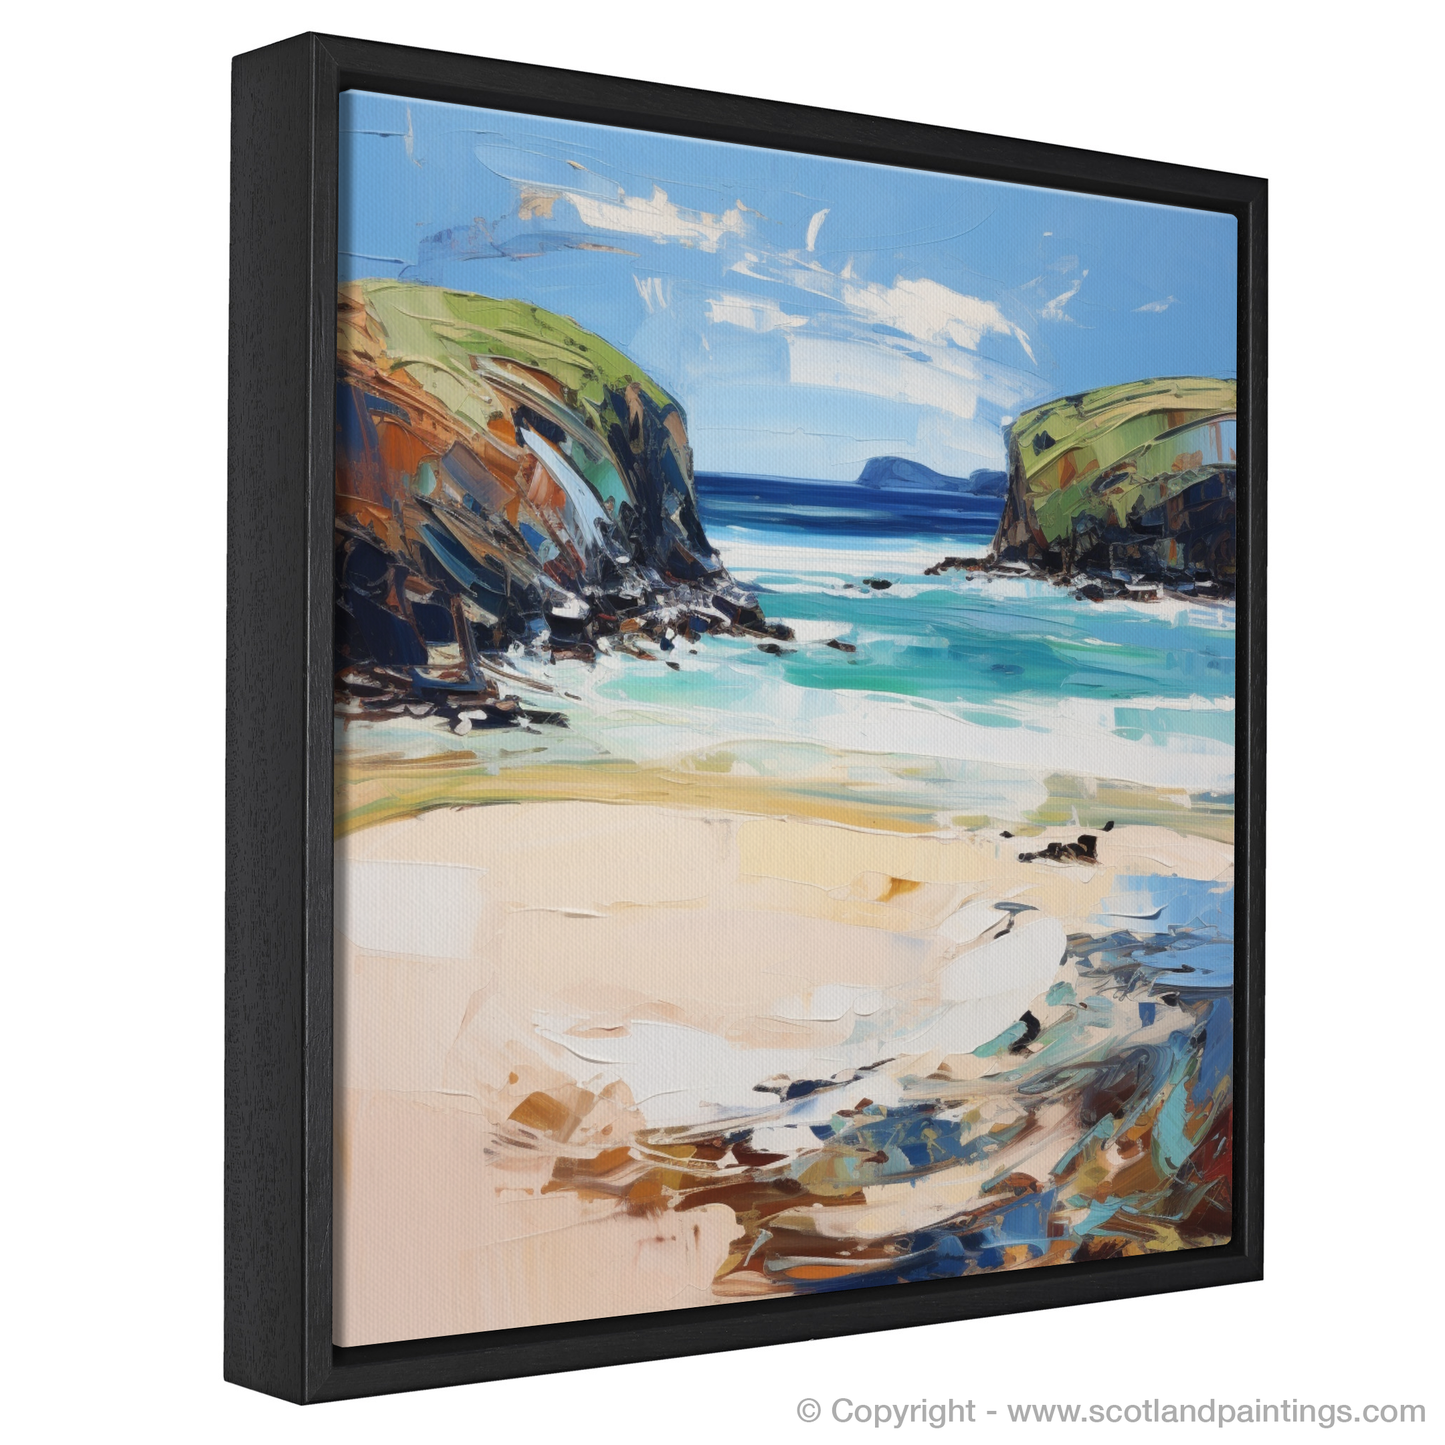 Painting and Art Print of Sandwood Bay, Sutherland entitled "Expressionist Essence of Sandwood Bay Sutherland".